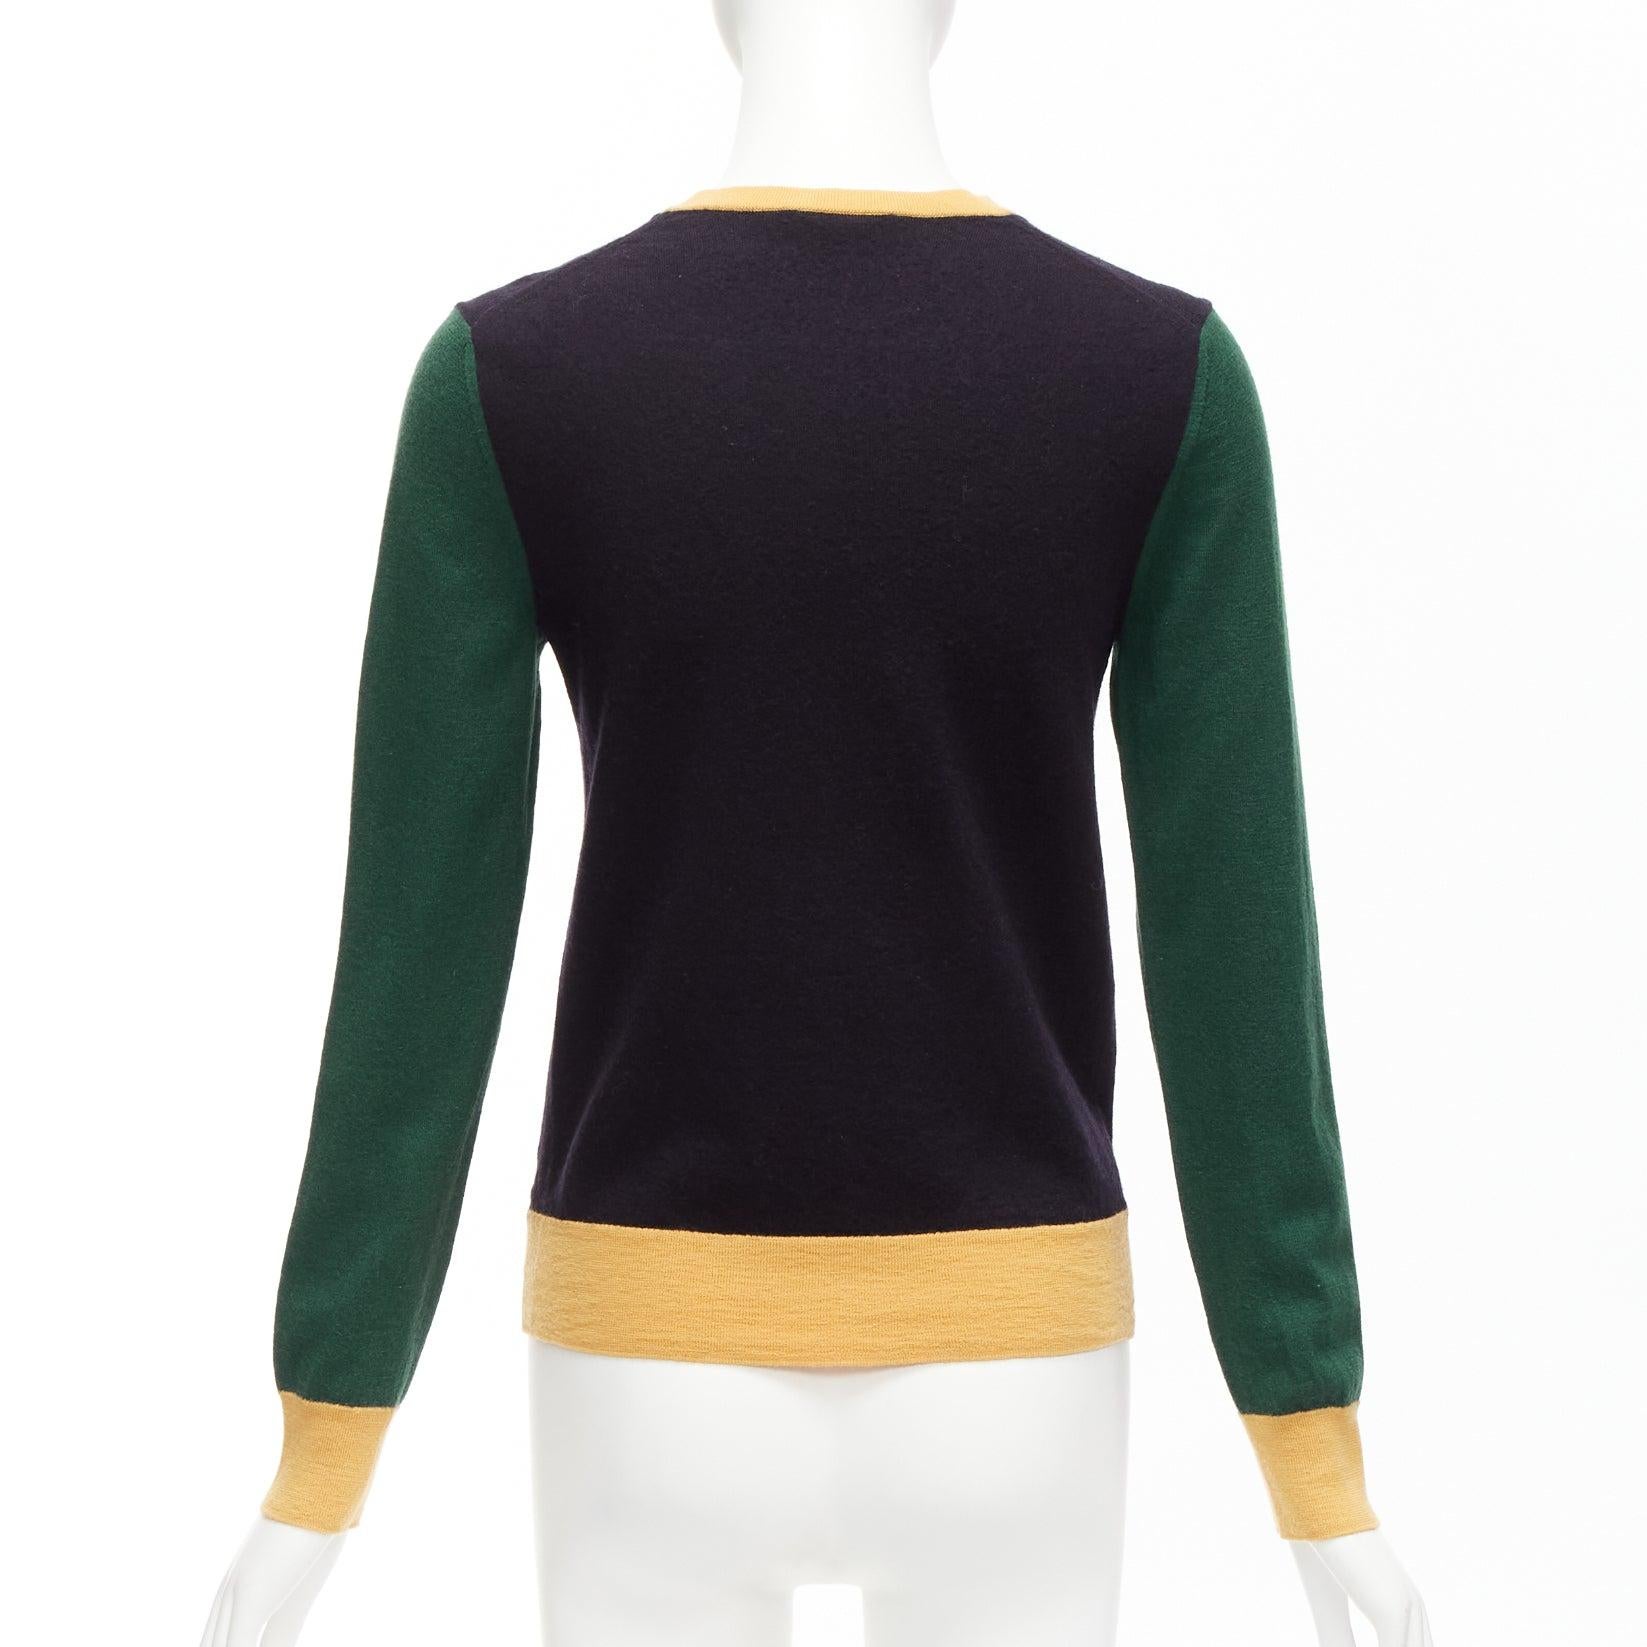 TORY BURCH 100% merino wool colorblocked logo button cardigan sweater M For Sale 2